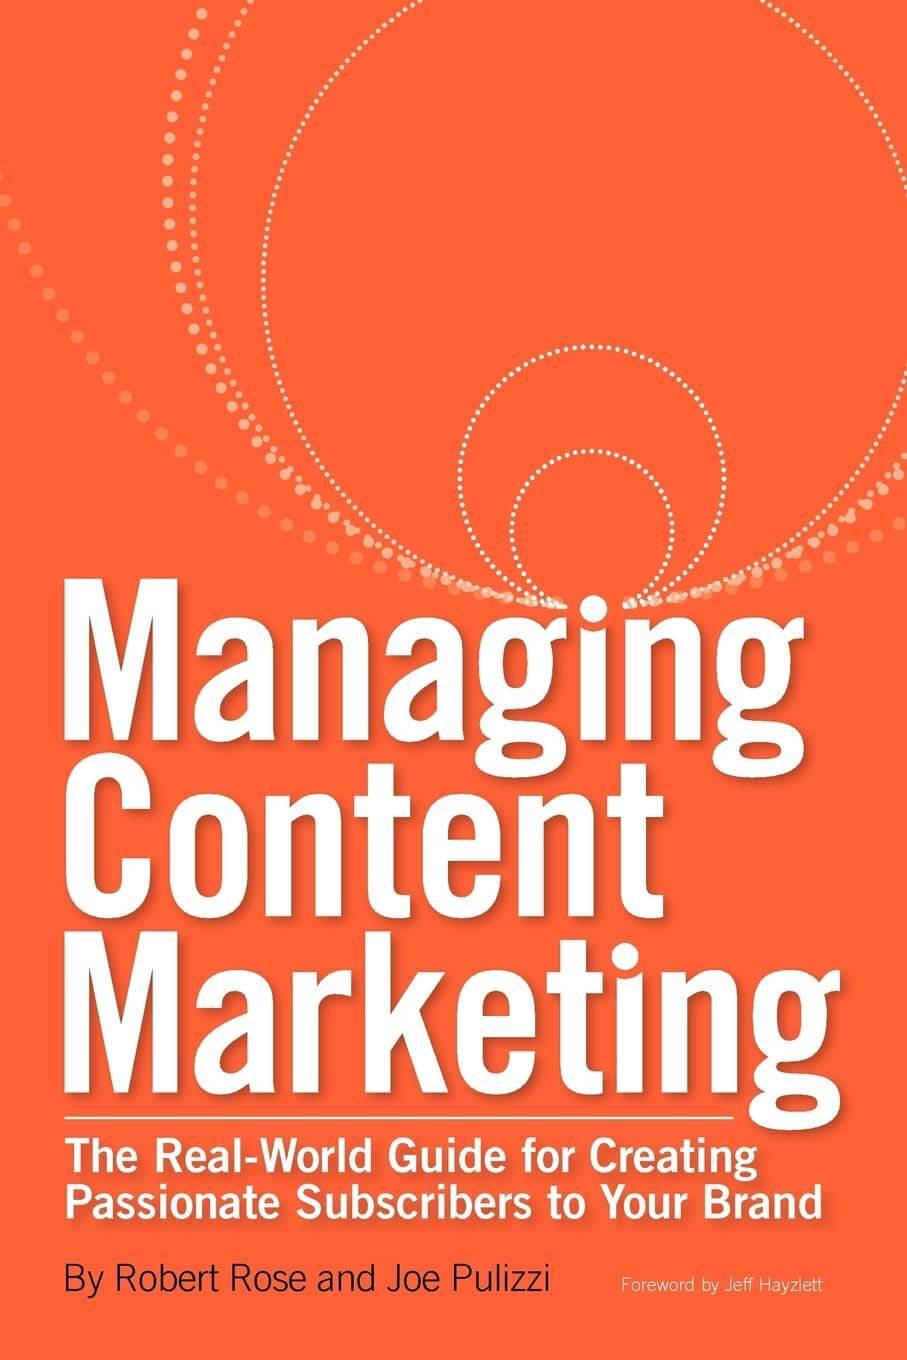 book cover of Robert Rose & Joe Pulizzi's "Managing Content Marketing"